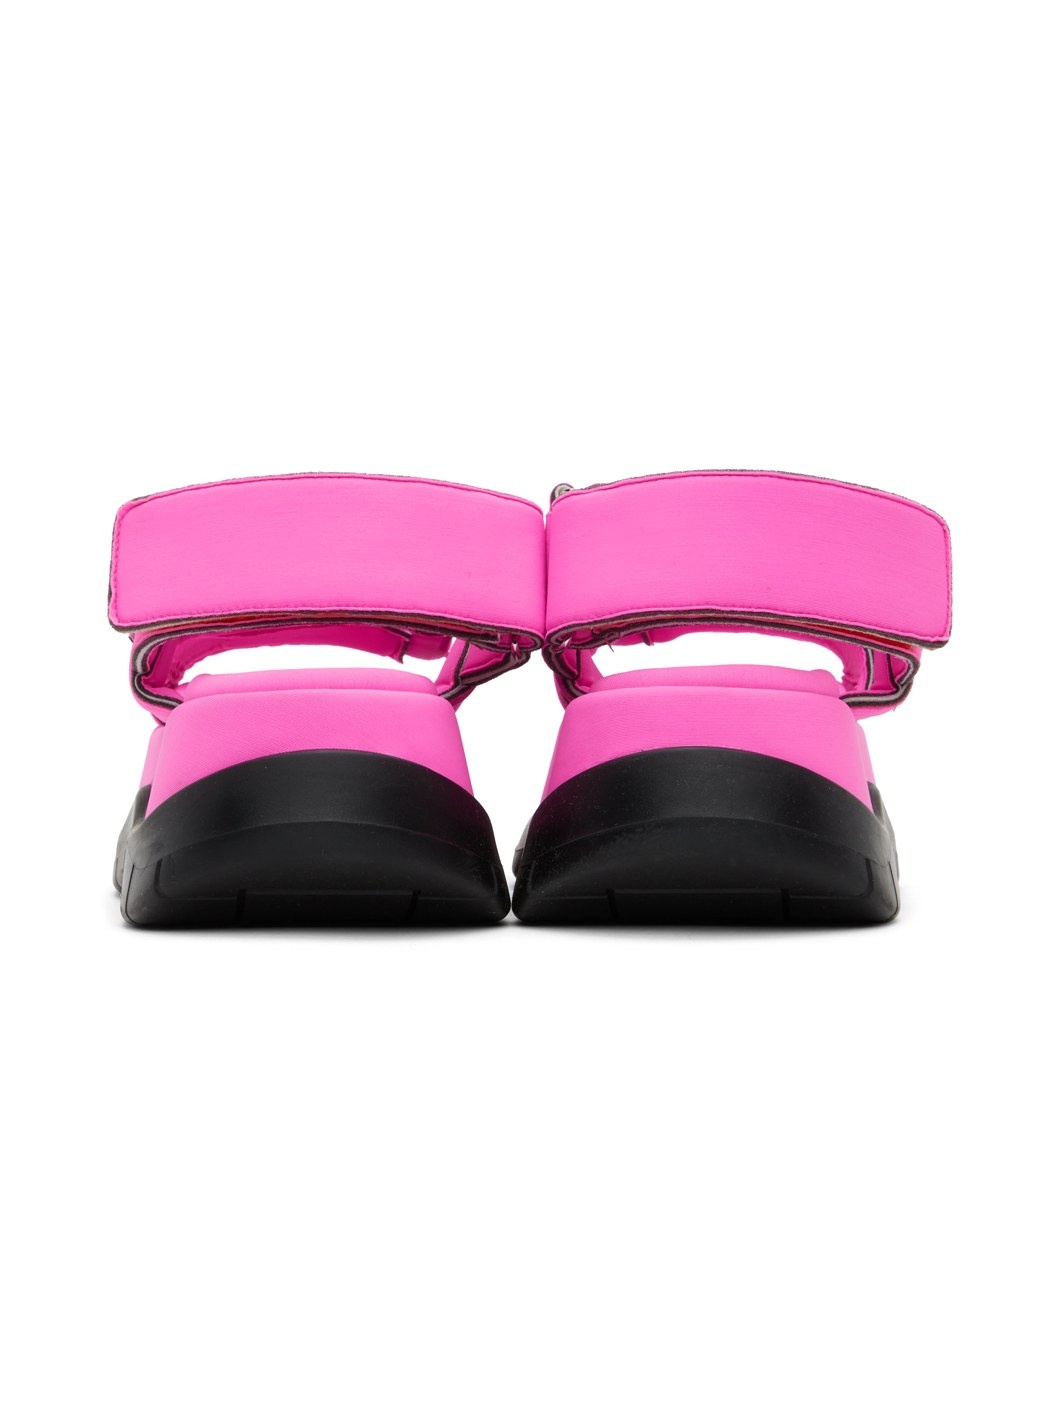 SSENSE Exclusive Pink Low Platform Sandals - 2